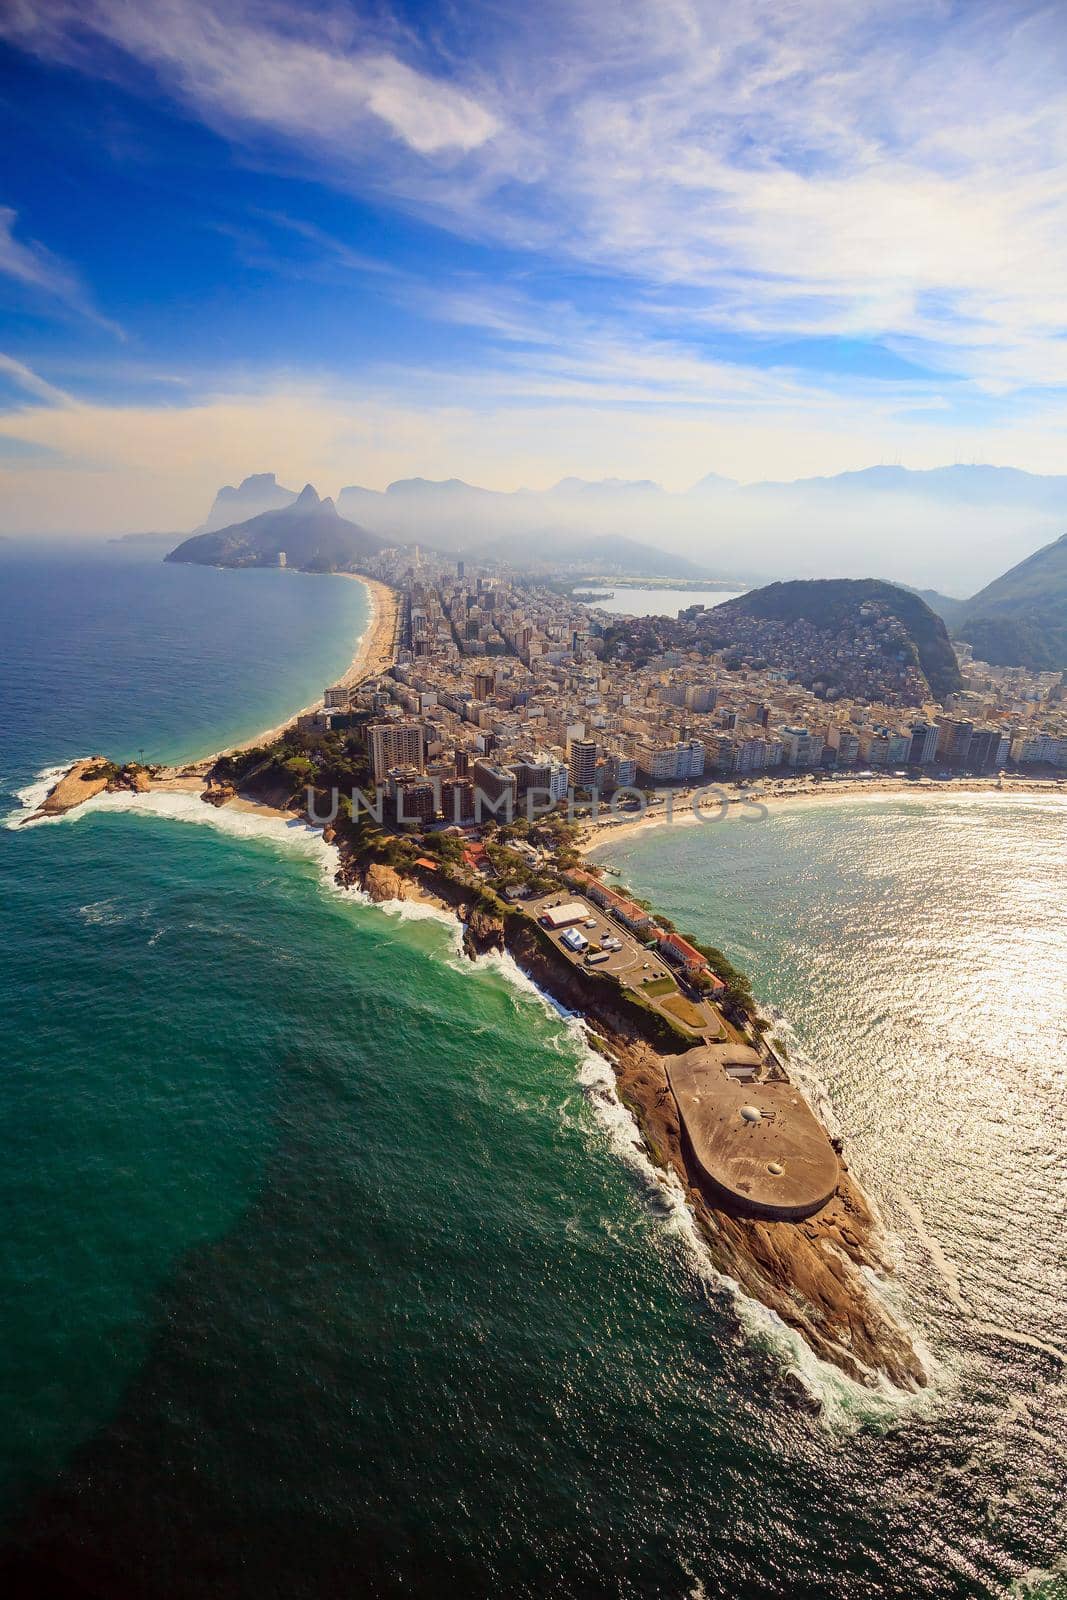 Copacabana Beach and Ipanema beach in Rio de Janeiro, Brazil by f11photo